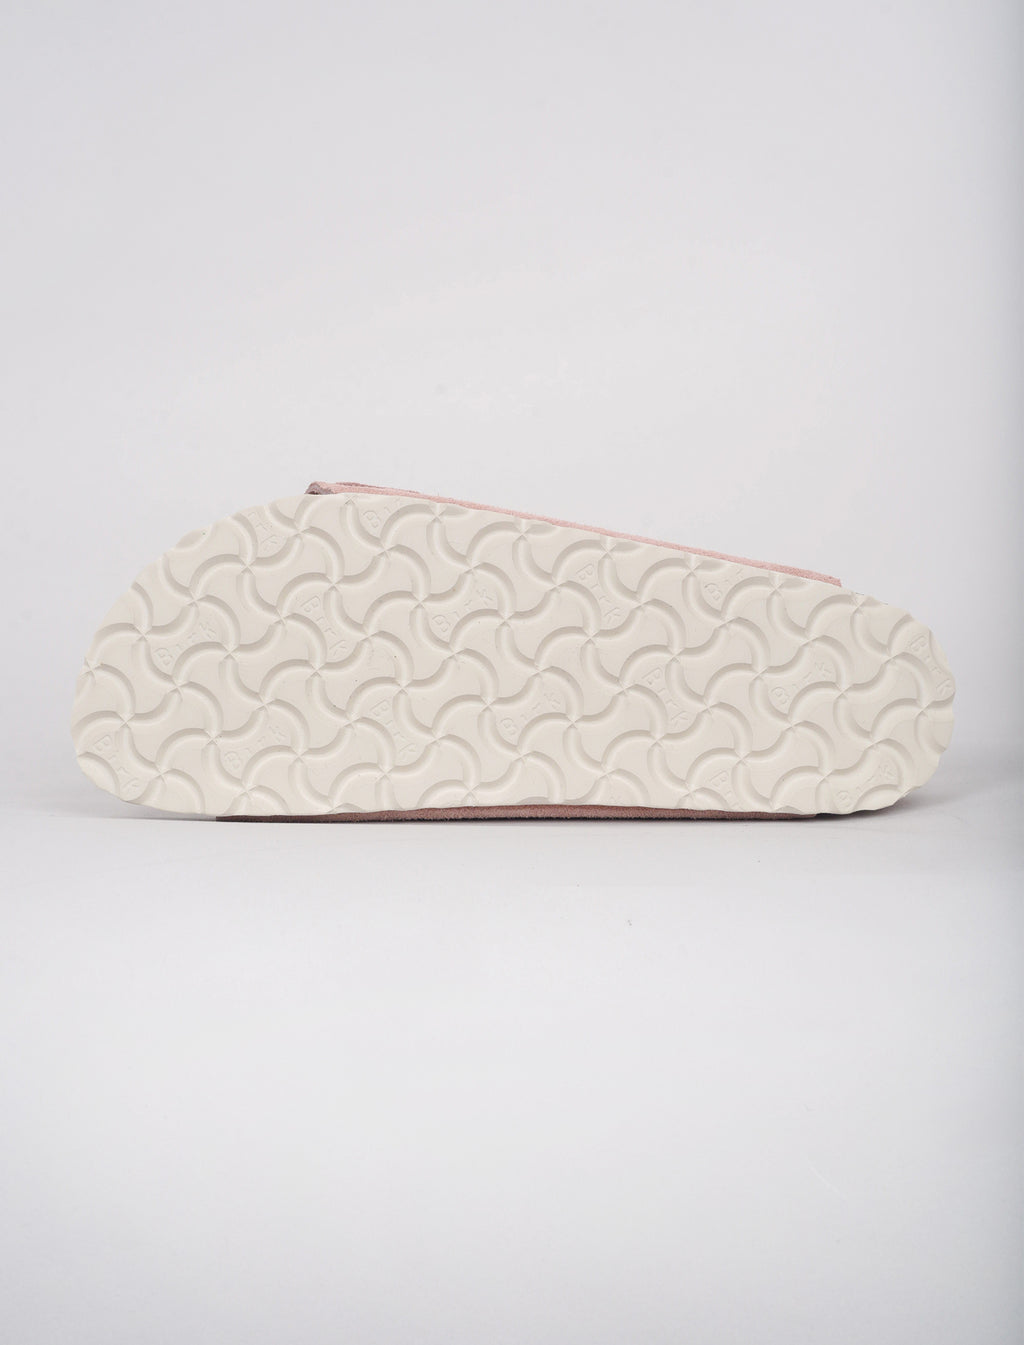 Birkenstock Arizona Soft Bed Sandal, Pink Clay 